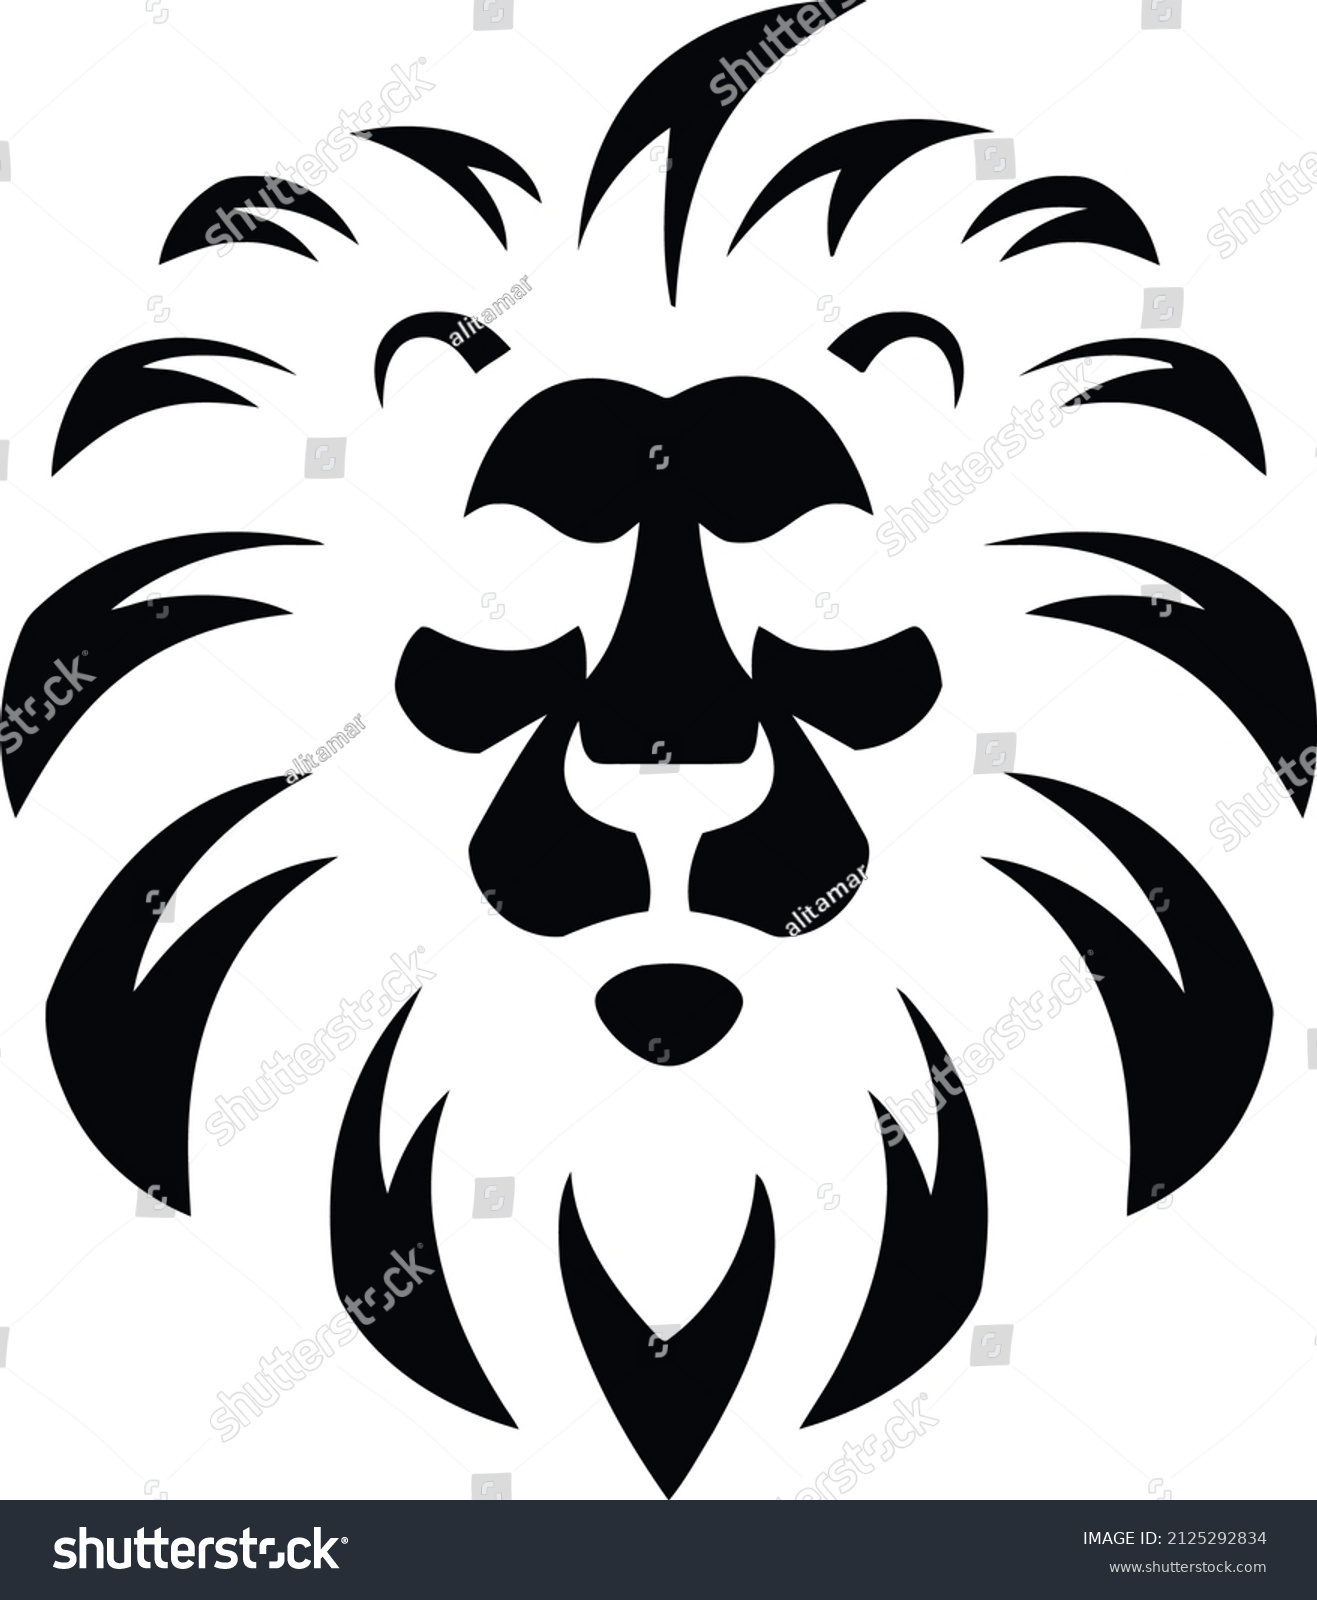 SVG of coleman lion head silhouette logo svg